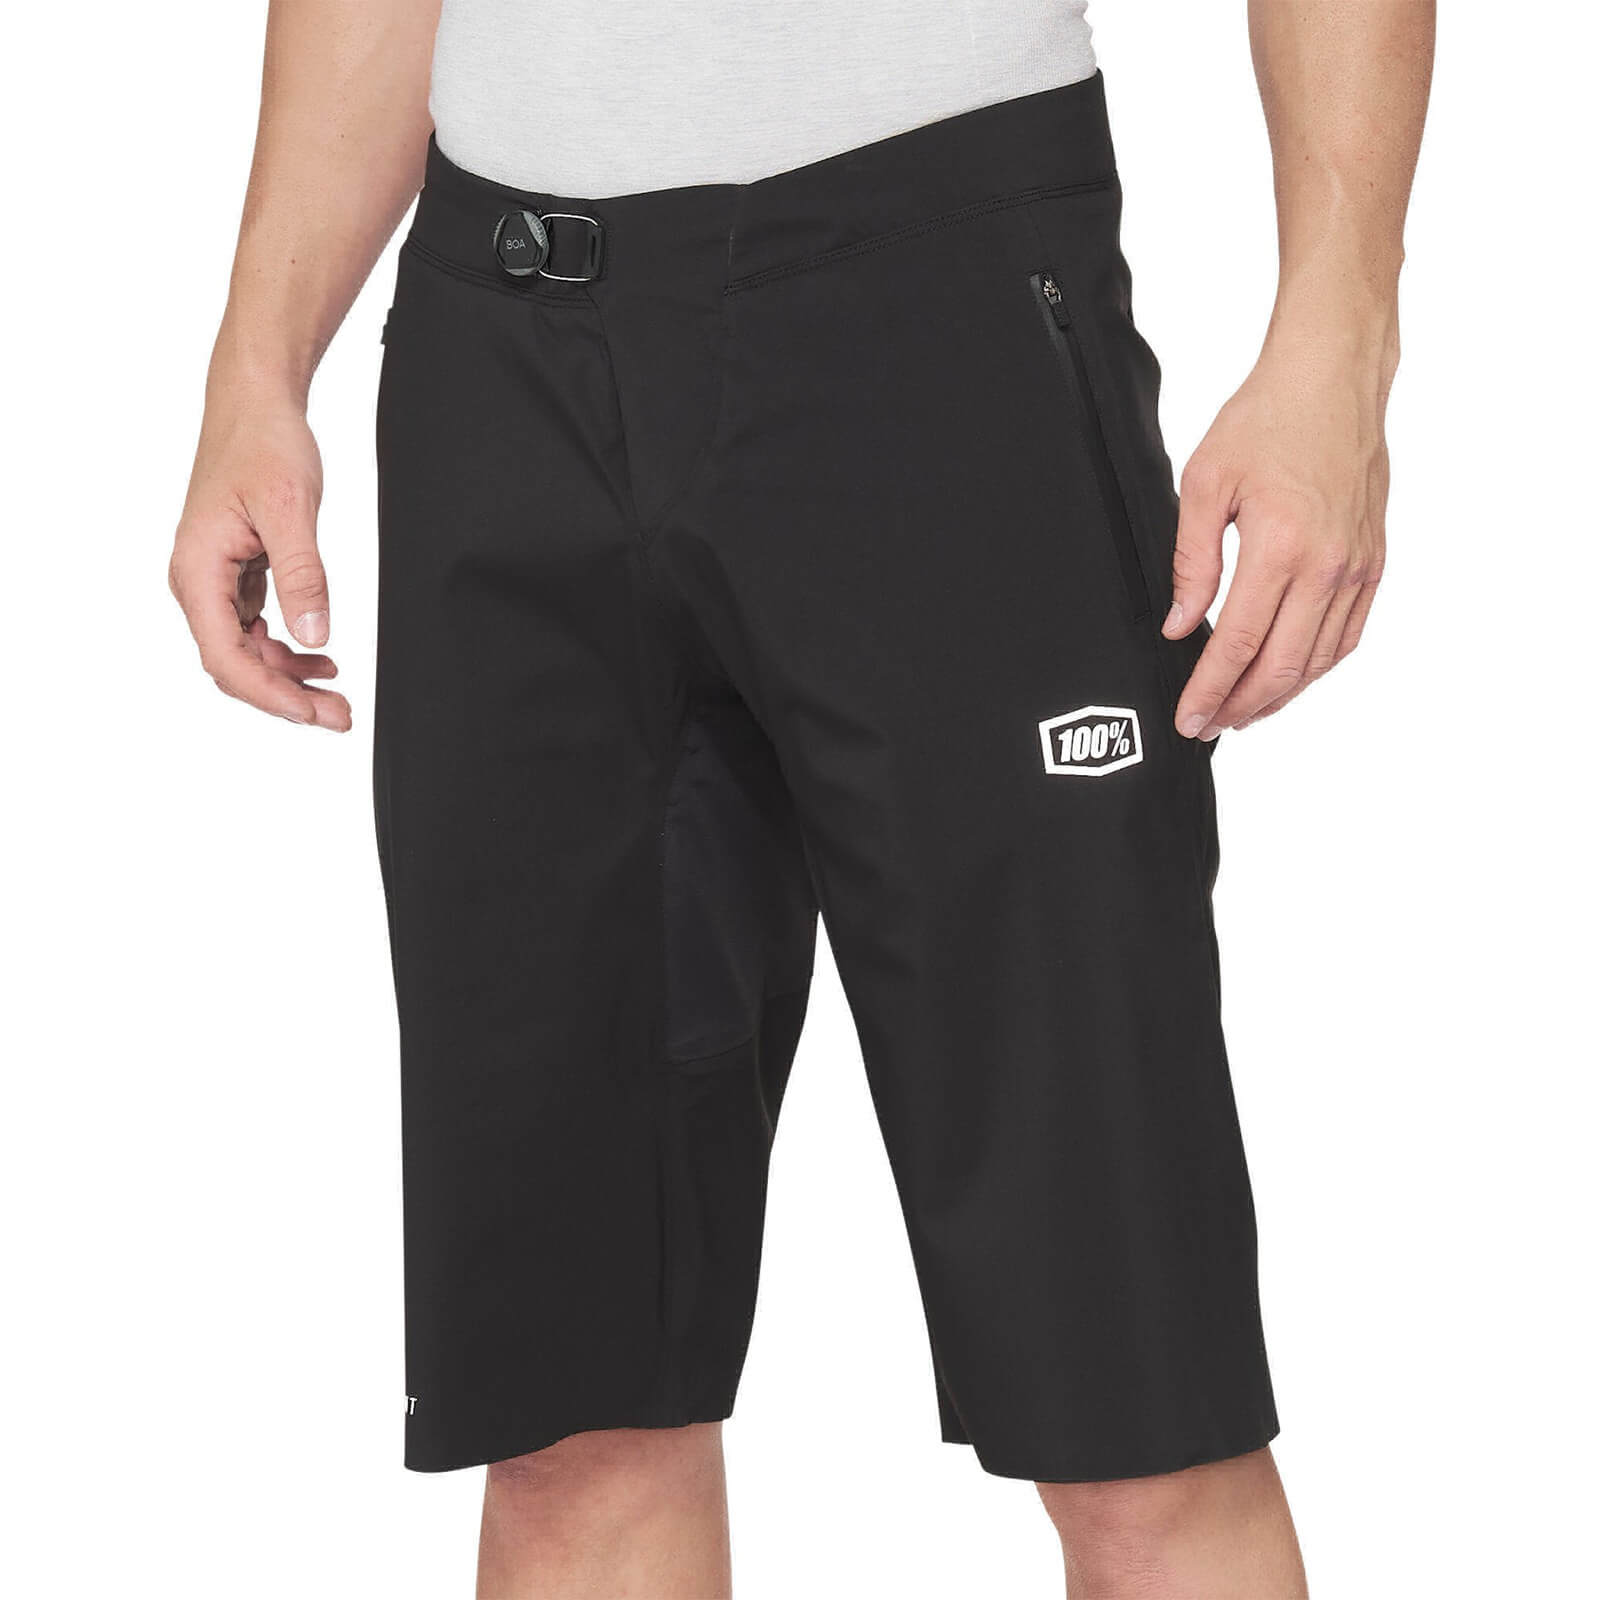 100% Hydromatic MTB Shorts - 28